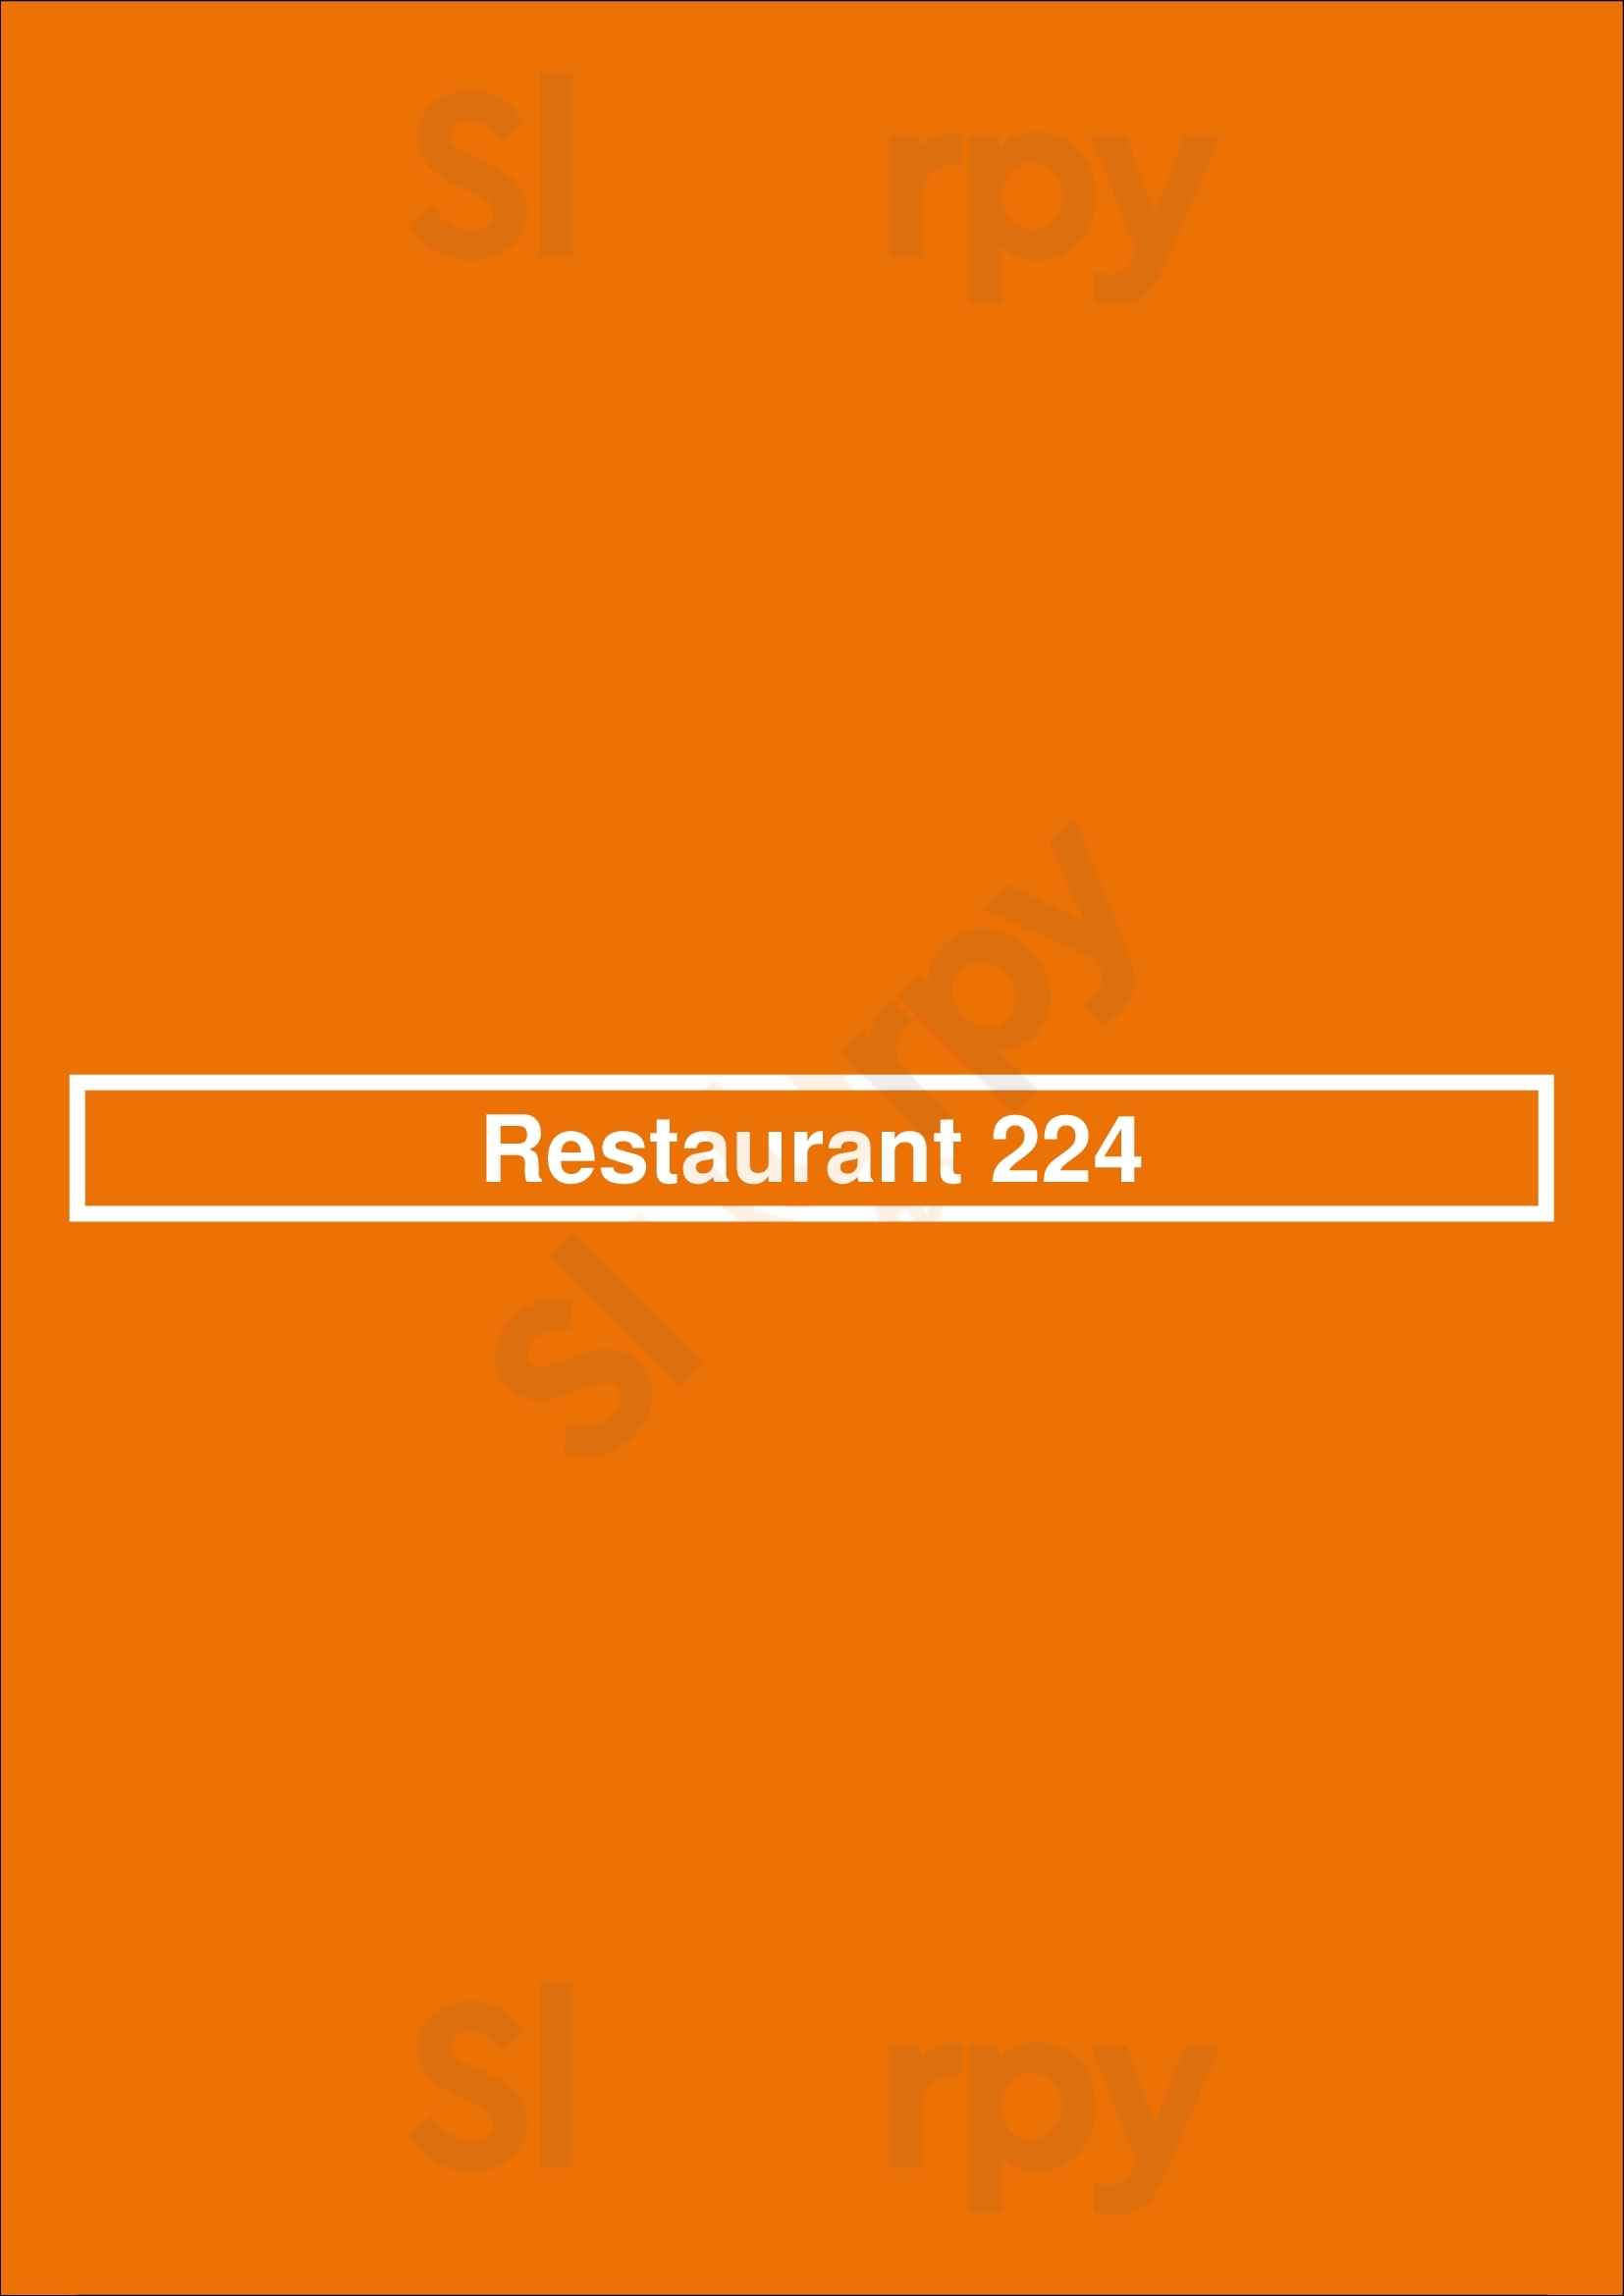 Restaurant 224 Saskatoon Menu - 1